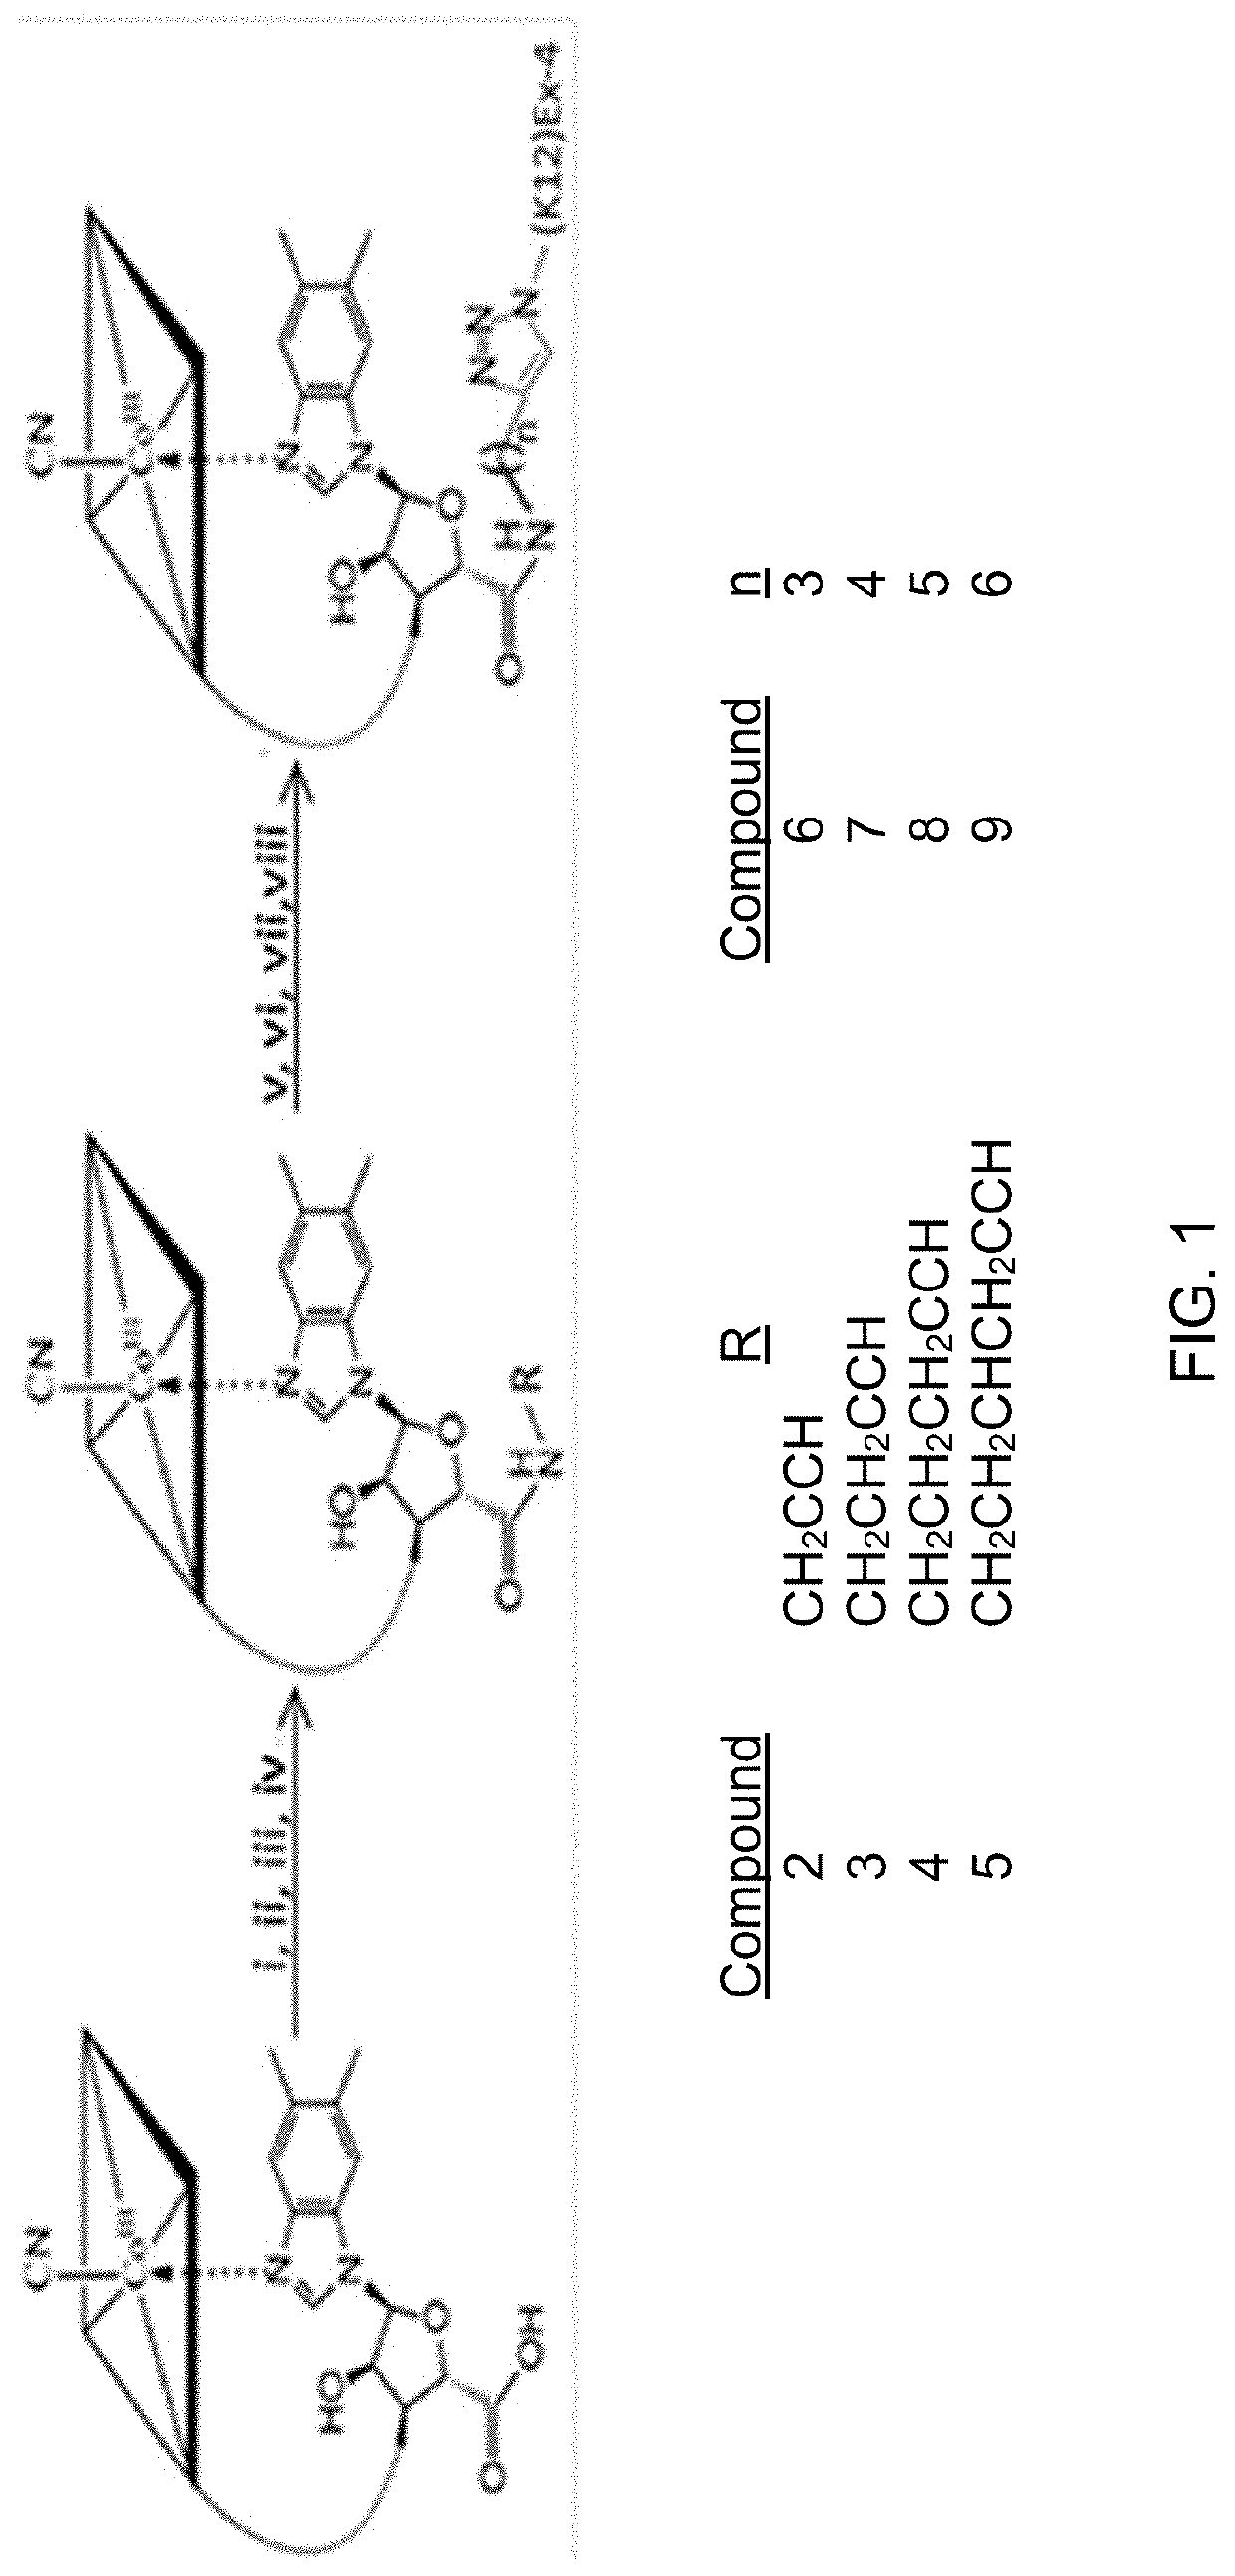 Glycemic Control Using Intrinsic Factor Bound to A Vitamin B12 Conjugate of a Glucagon-Like Peptide-1 Receptor Agonist